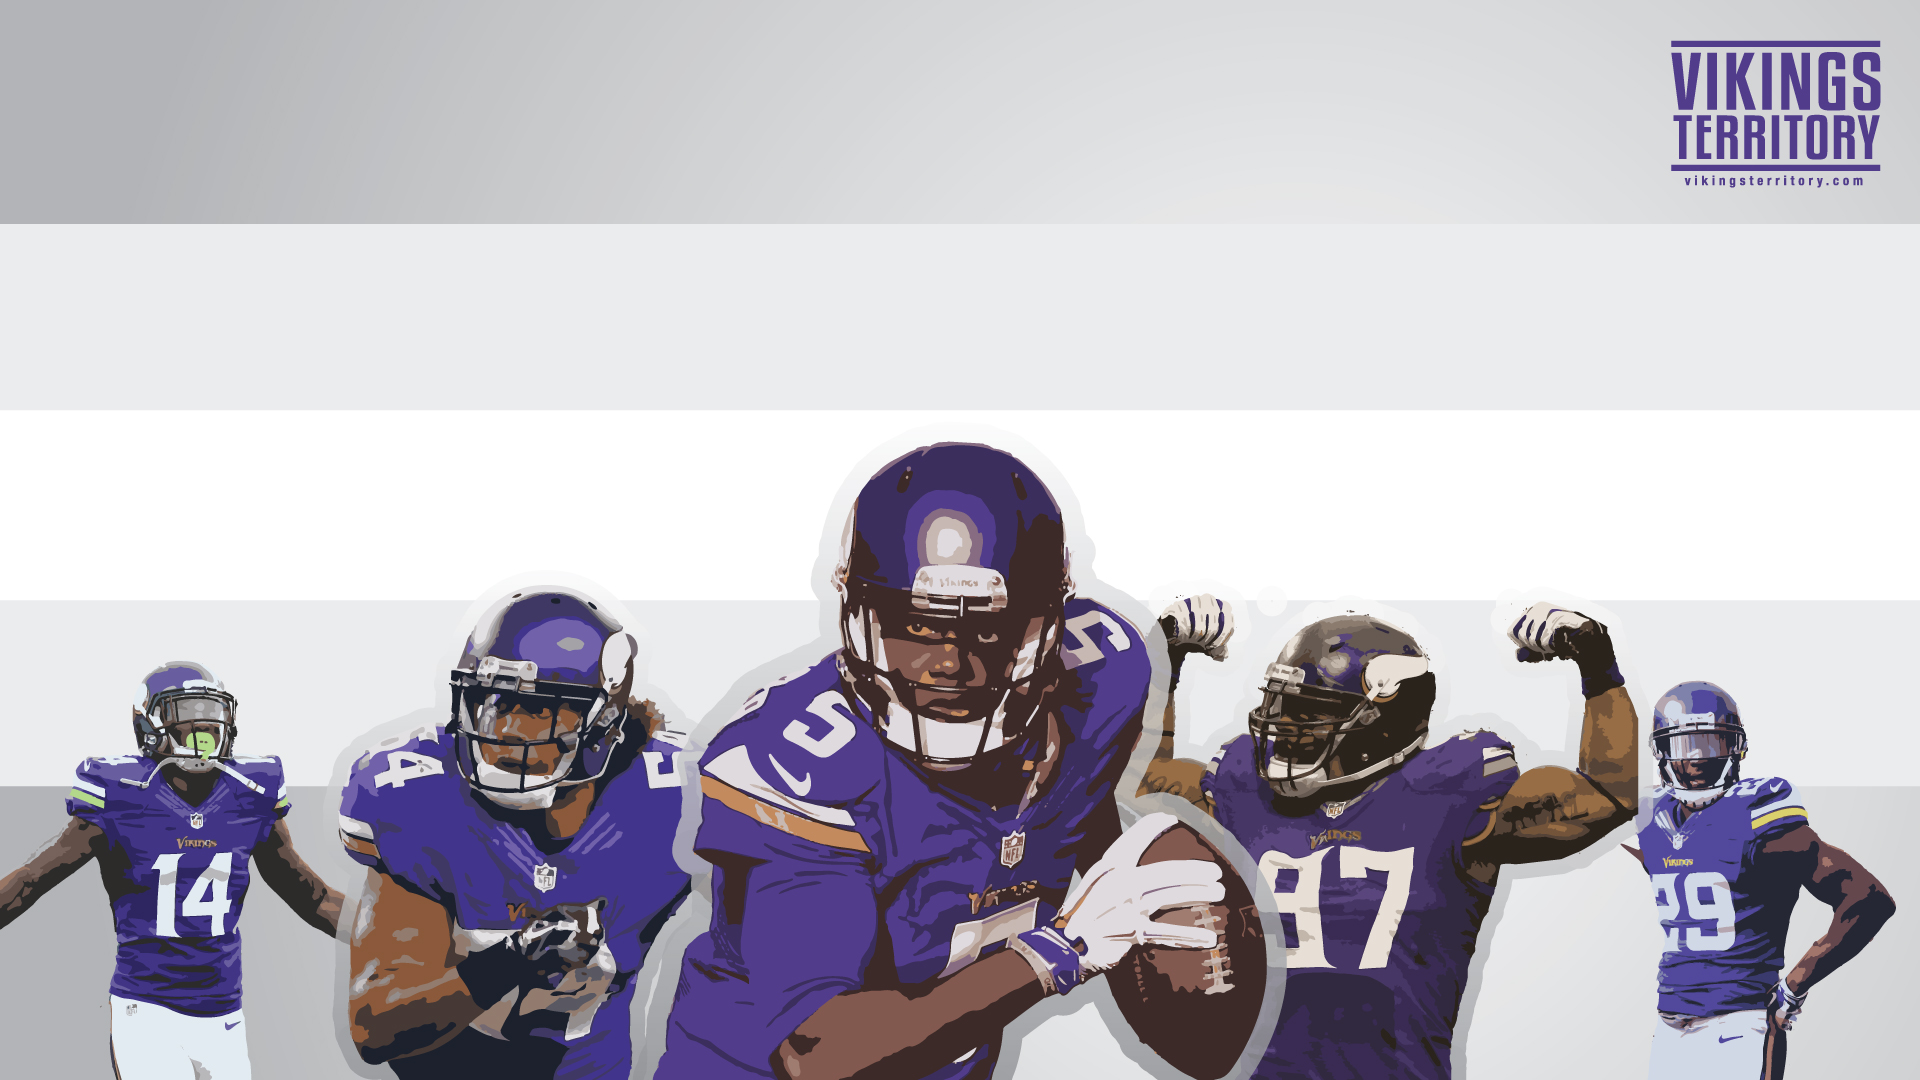 Wallpaper Nfl Seattle Seahawks Washington Football Team Minnesota Vikings  American Football Background  Download Free Image